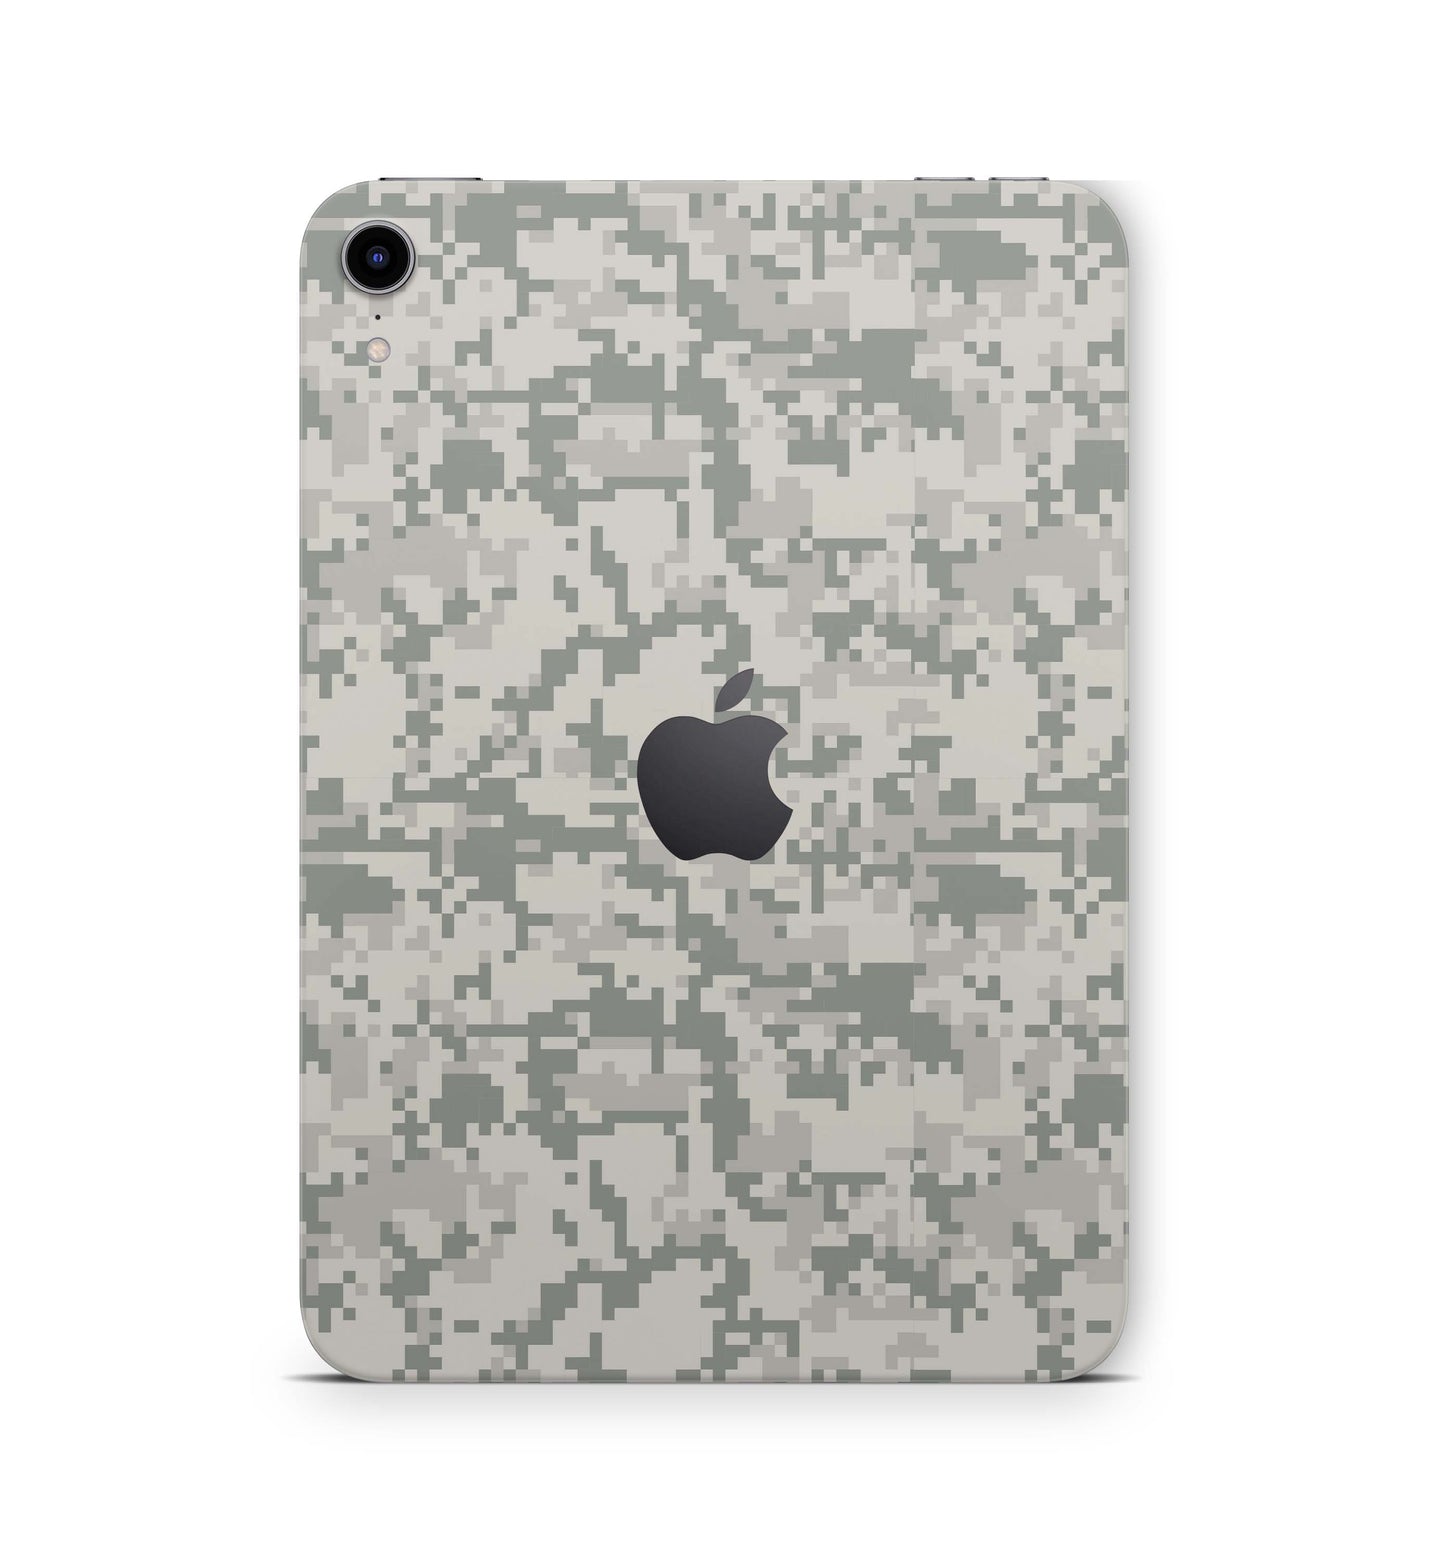 iPad Mini Skin Design Cover Folie Vinyl Skins & Wraps für alle iPad Mini Modelle Aufkleber Skins4u Acu-Camo  